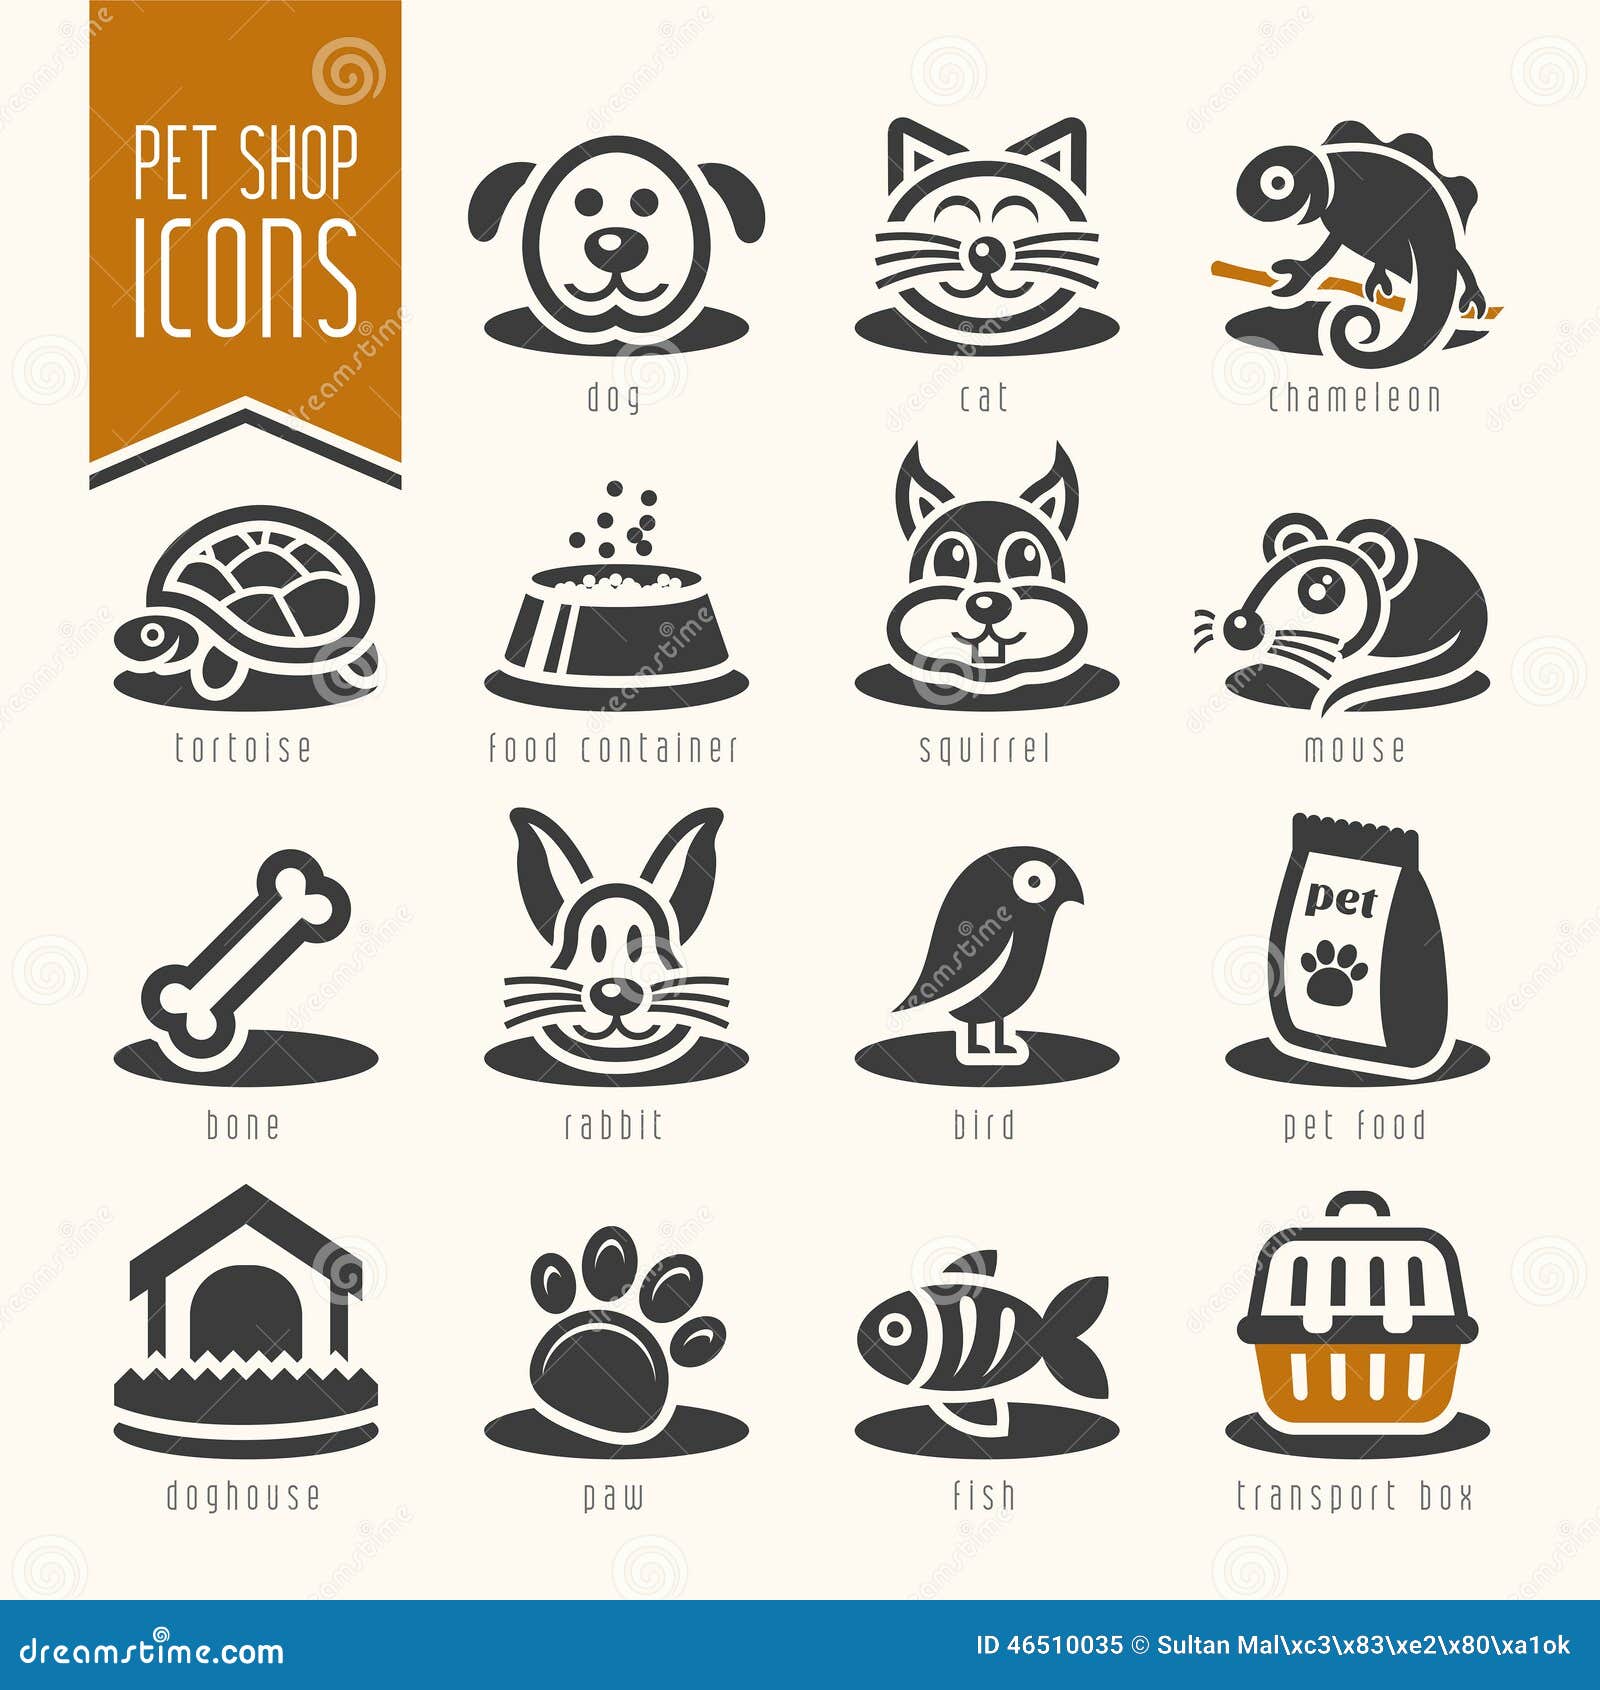 pet friendly icon vector pet paw or dog label Vet clinic, shop